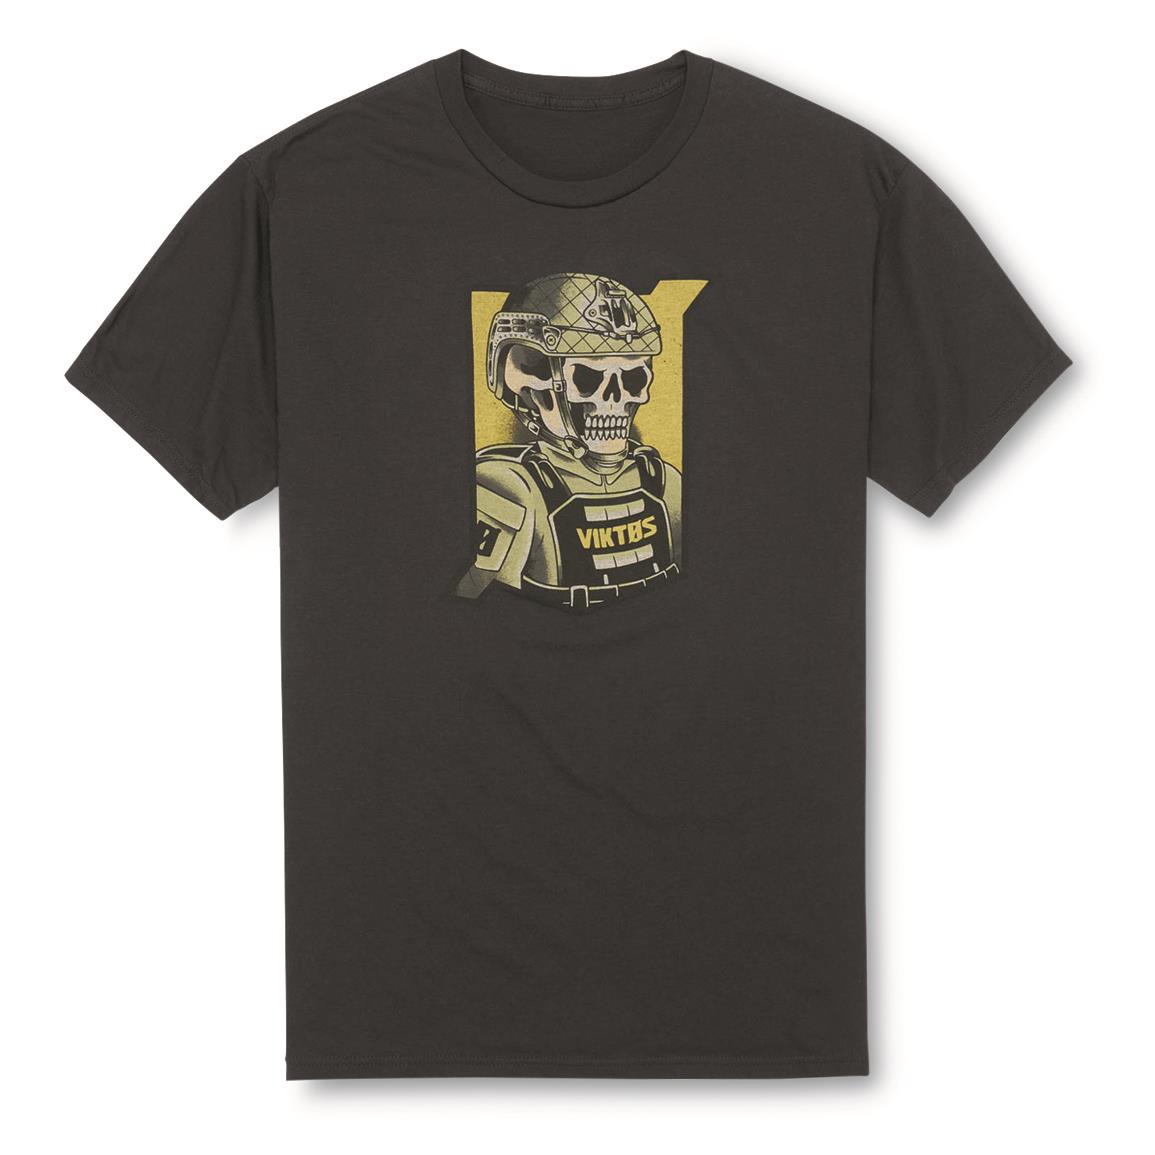 Viktos Soldier Jerry T-Shirt, Black